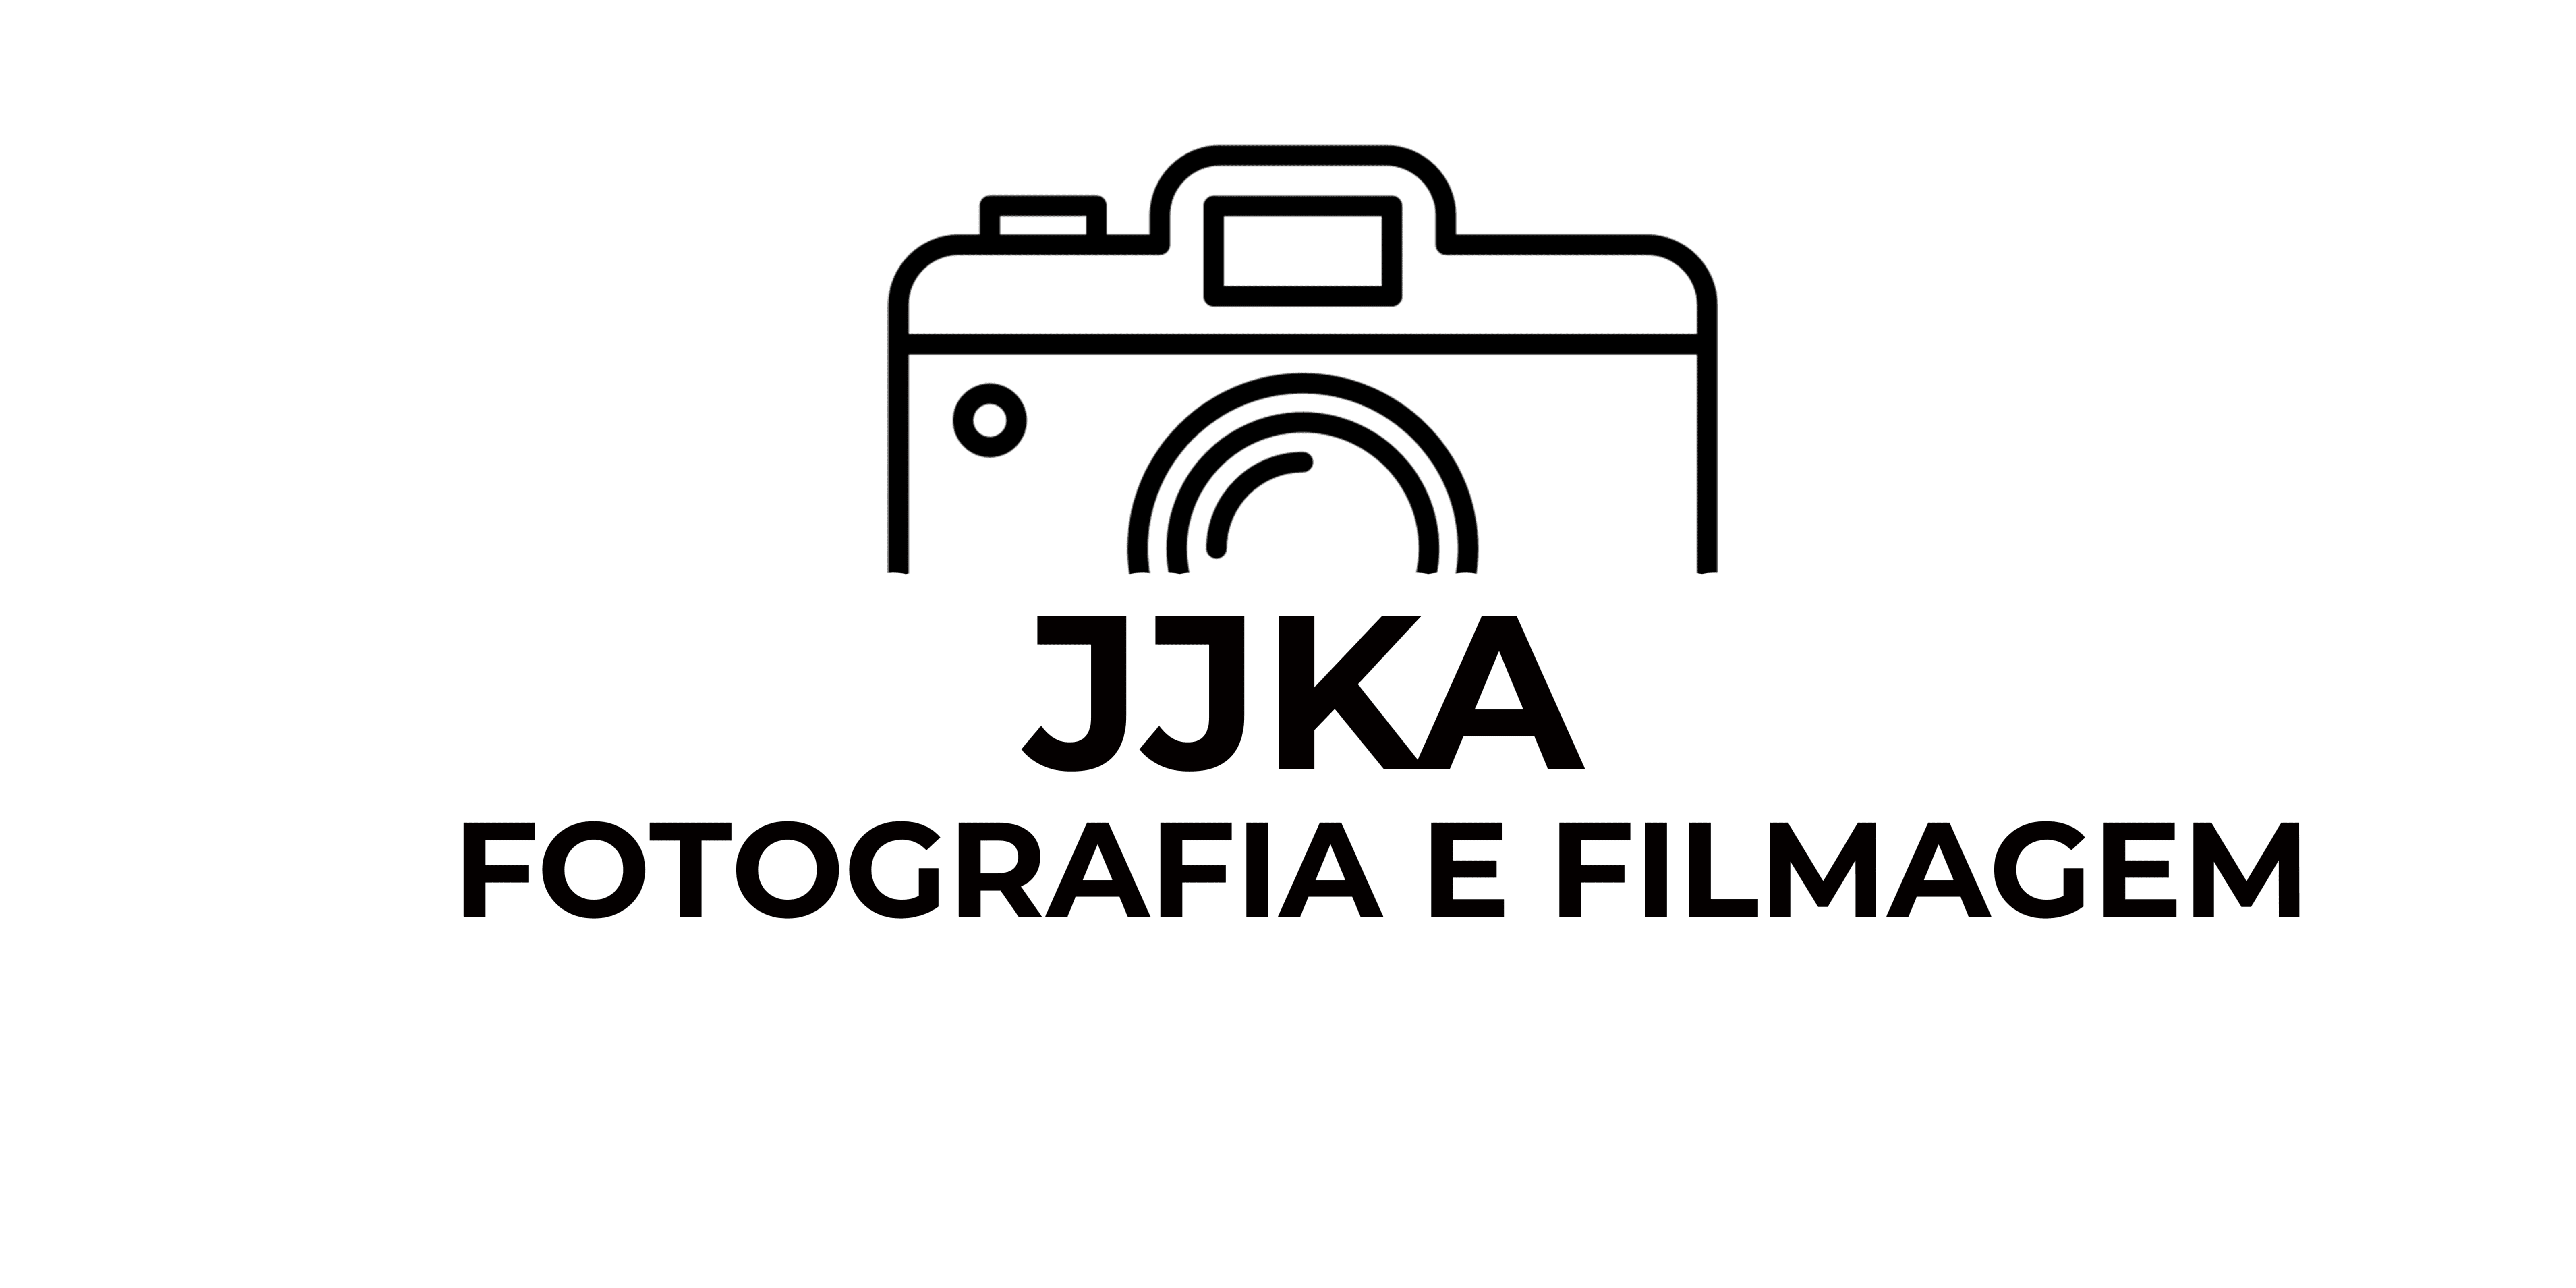 JJKA  Fotografia e Filmagem